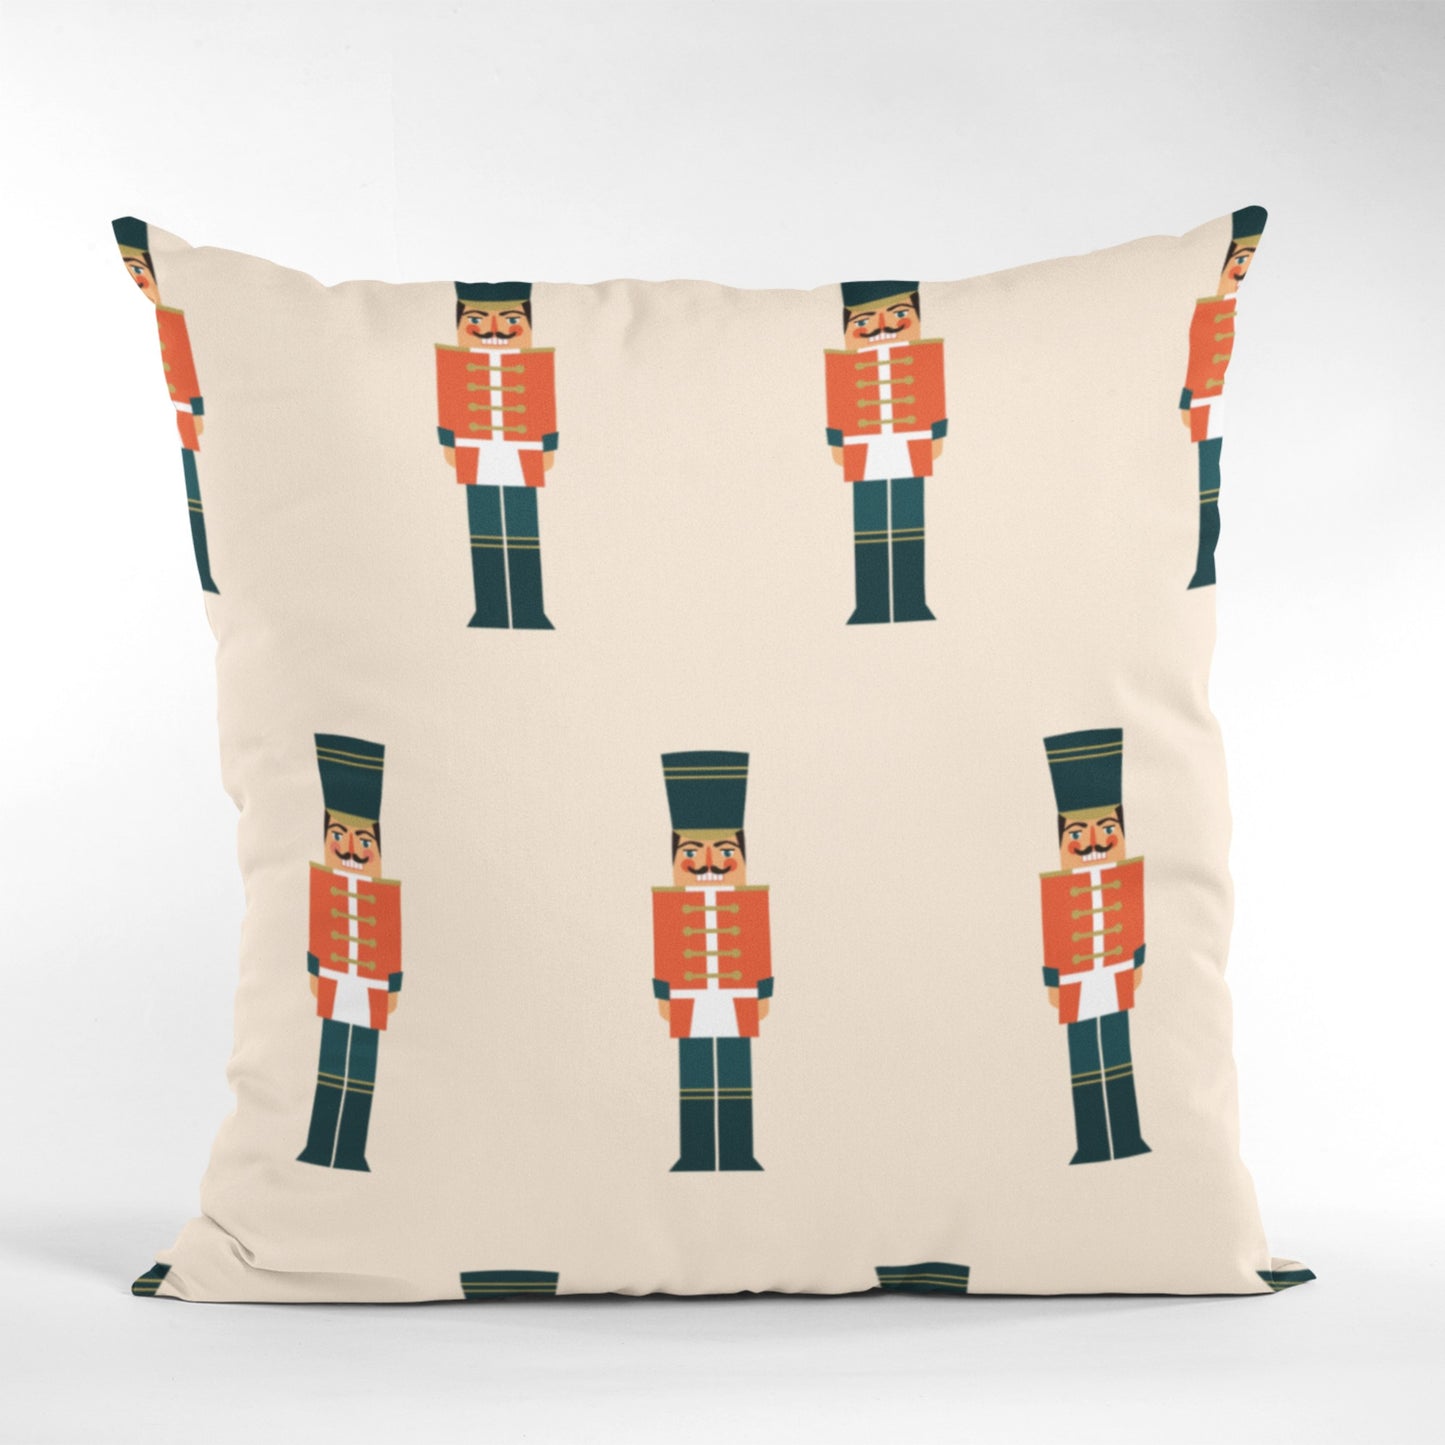 Cozy Pillow with Whimsical Nutcracker Design